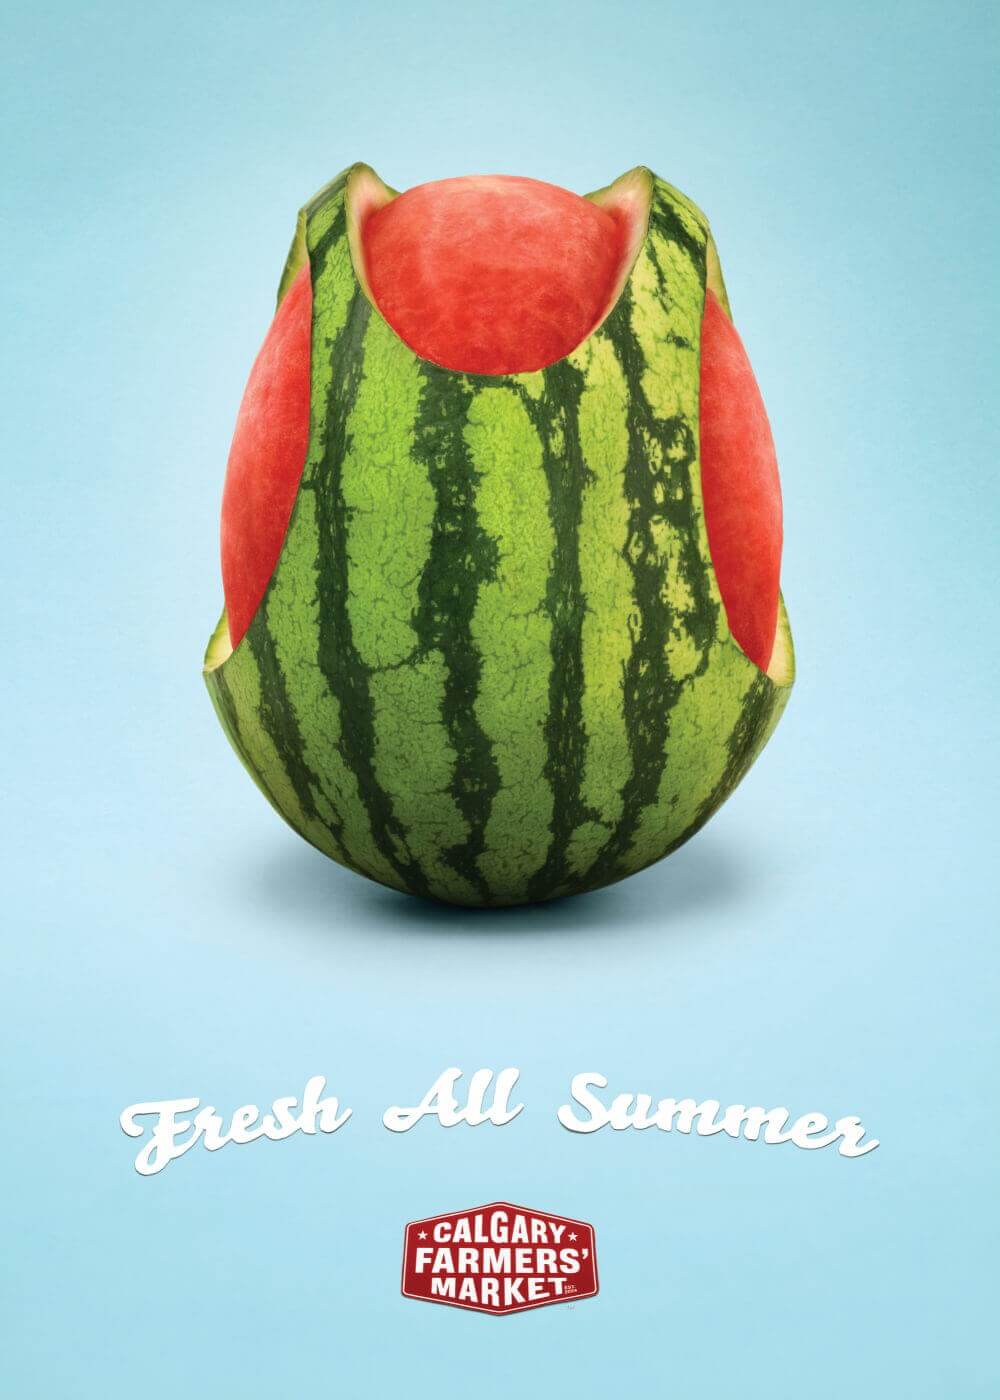 Creative Summer Ad